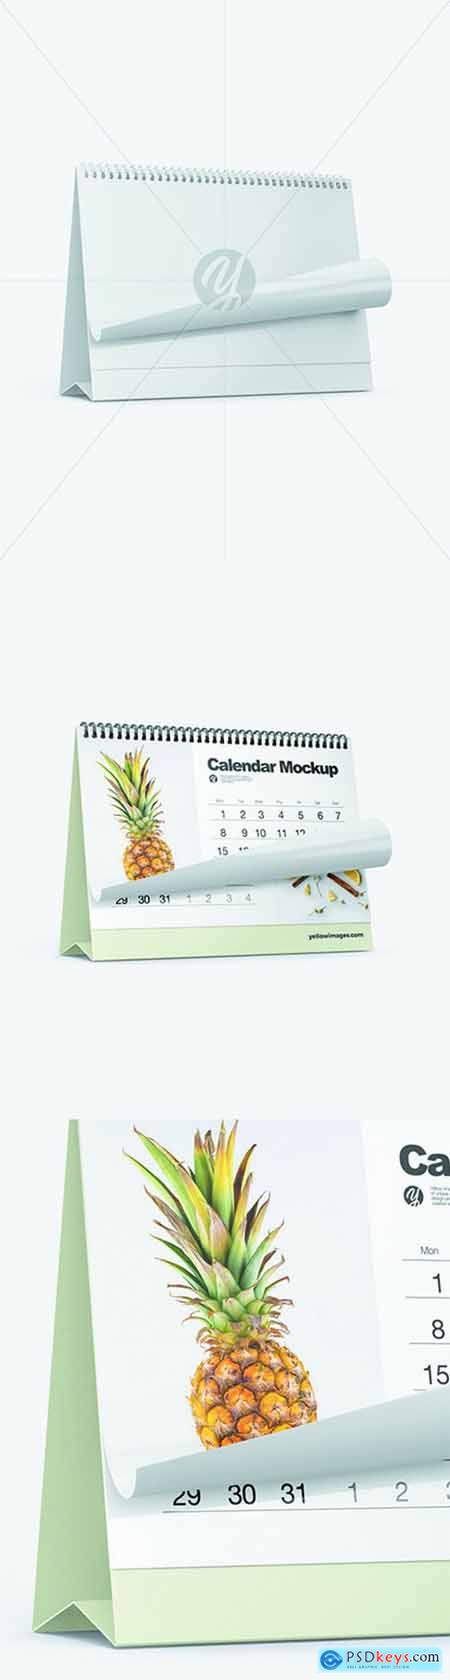 Calendar Mockup 68677